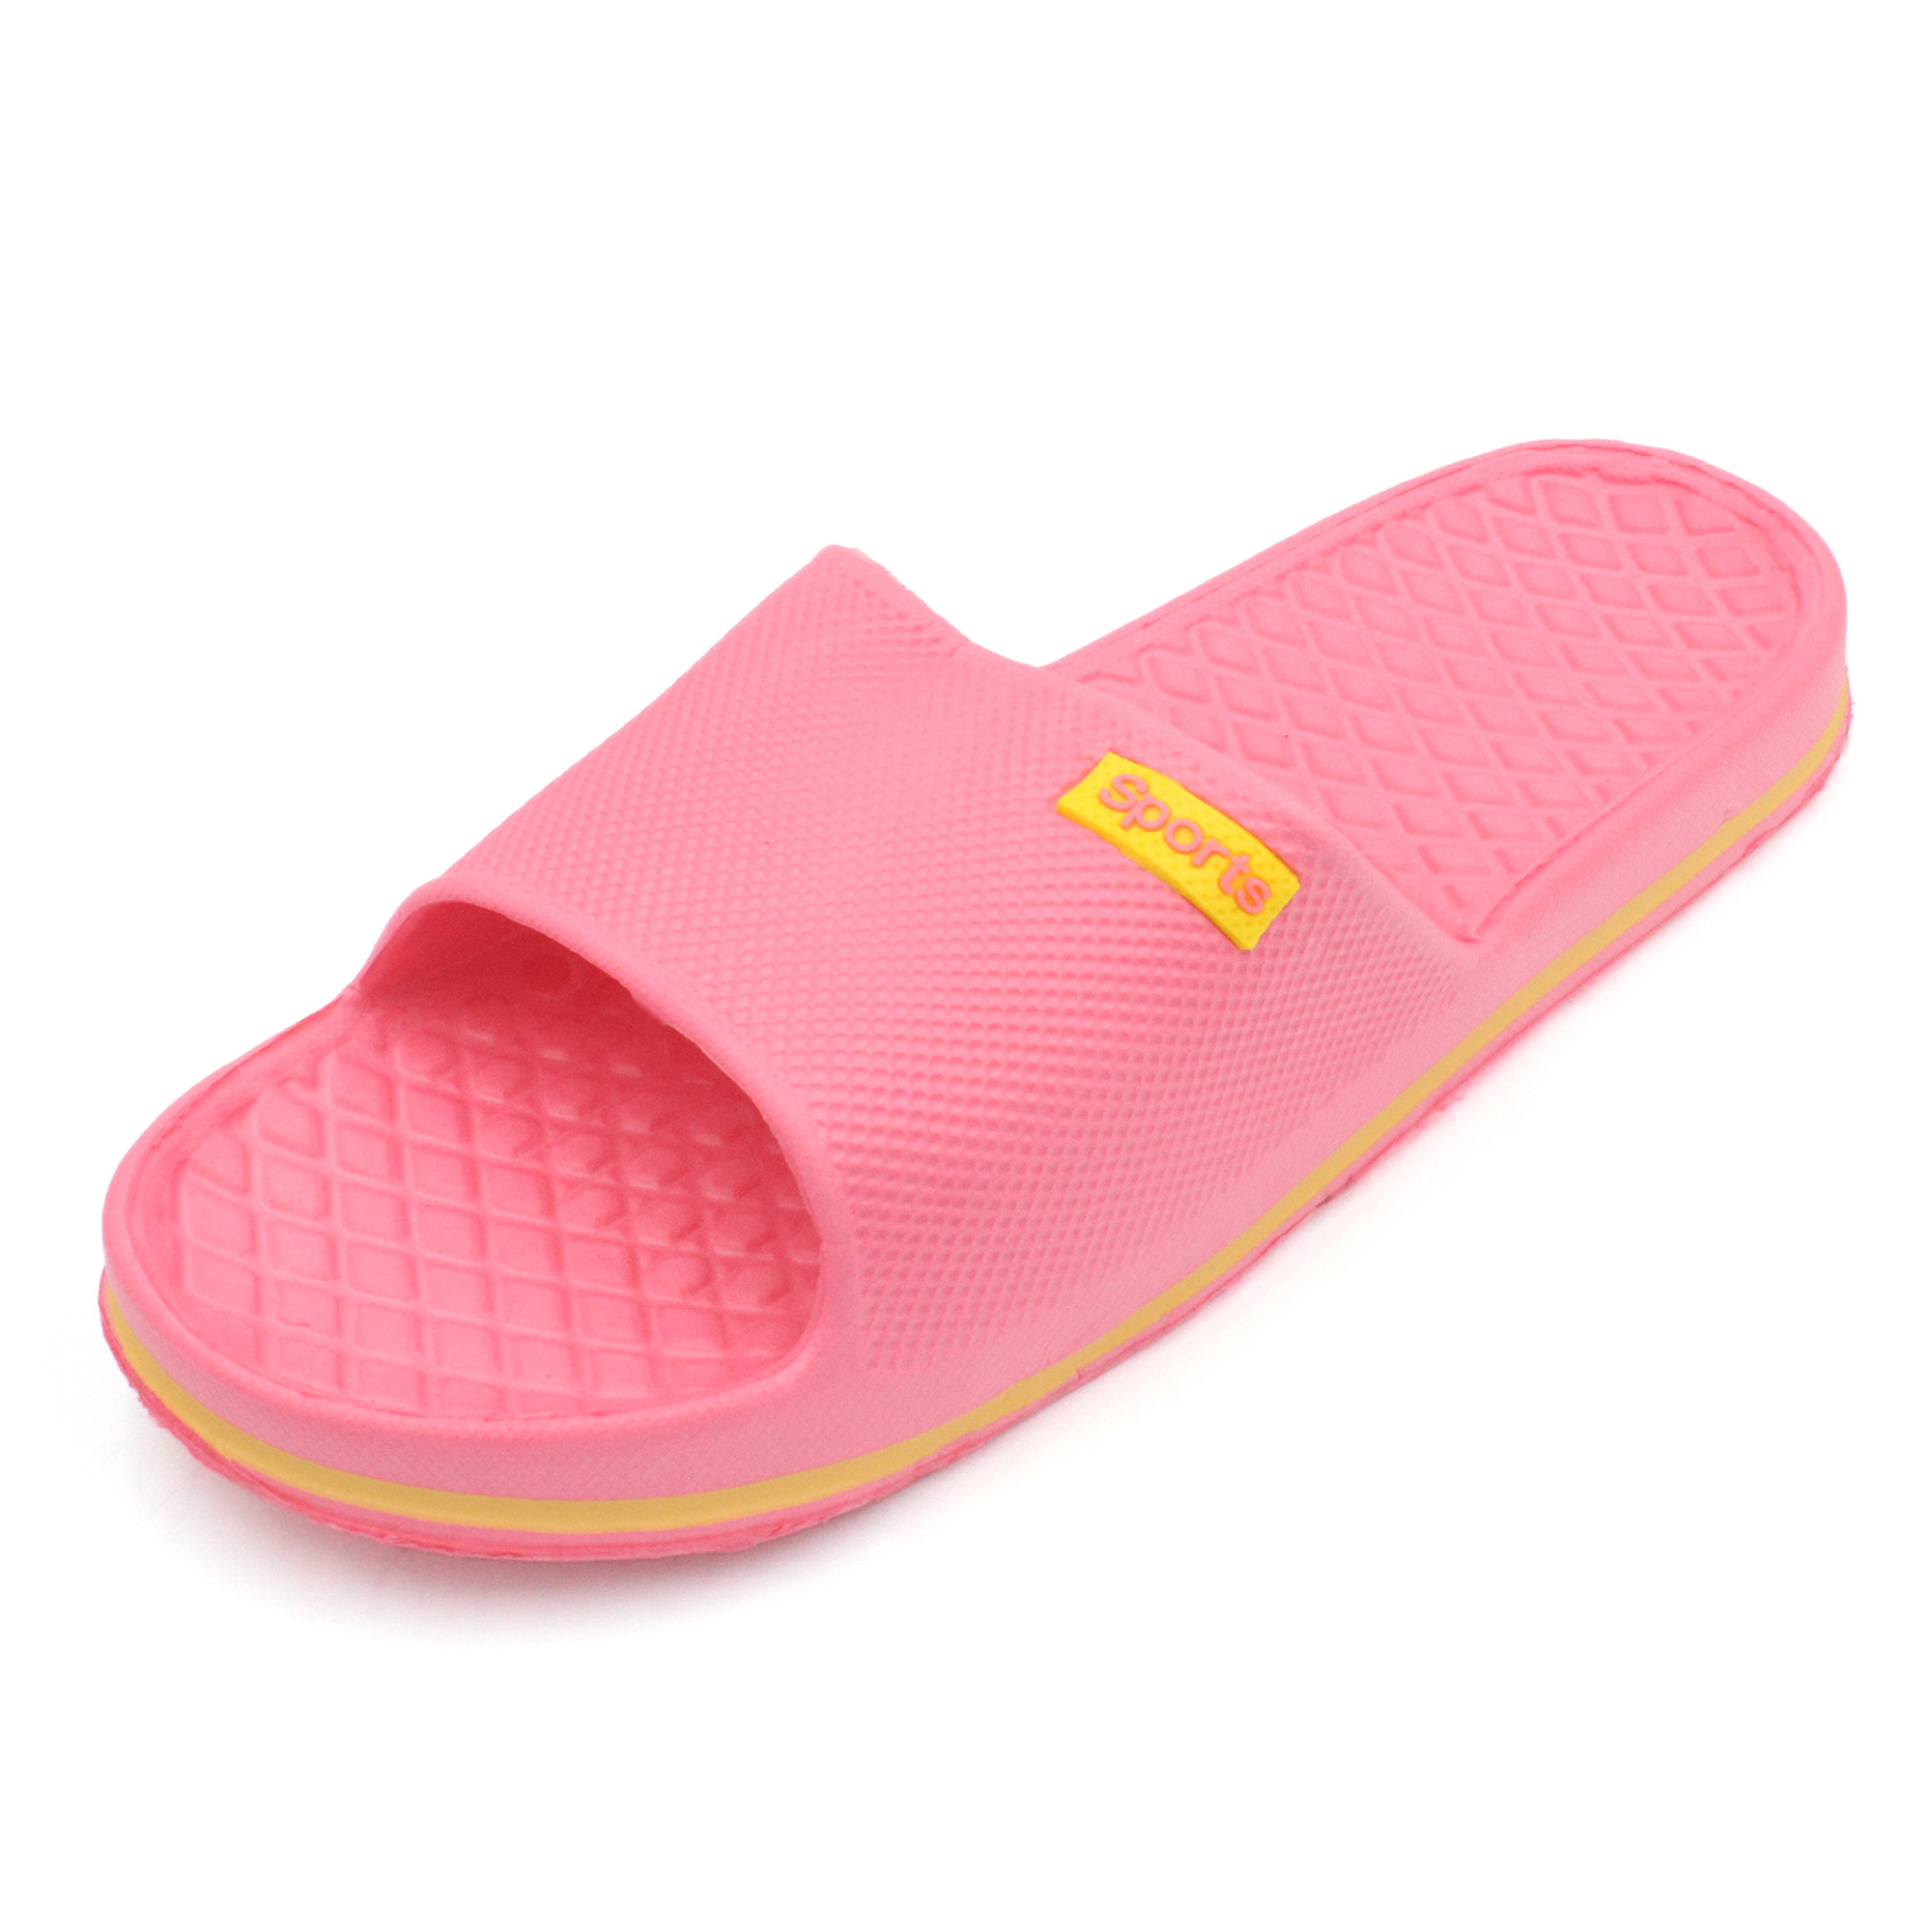 Womens Slides Sandals Sports Beach Summer Shoes | eBay